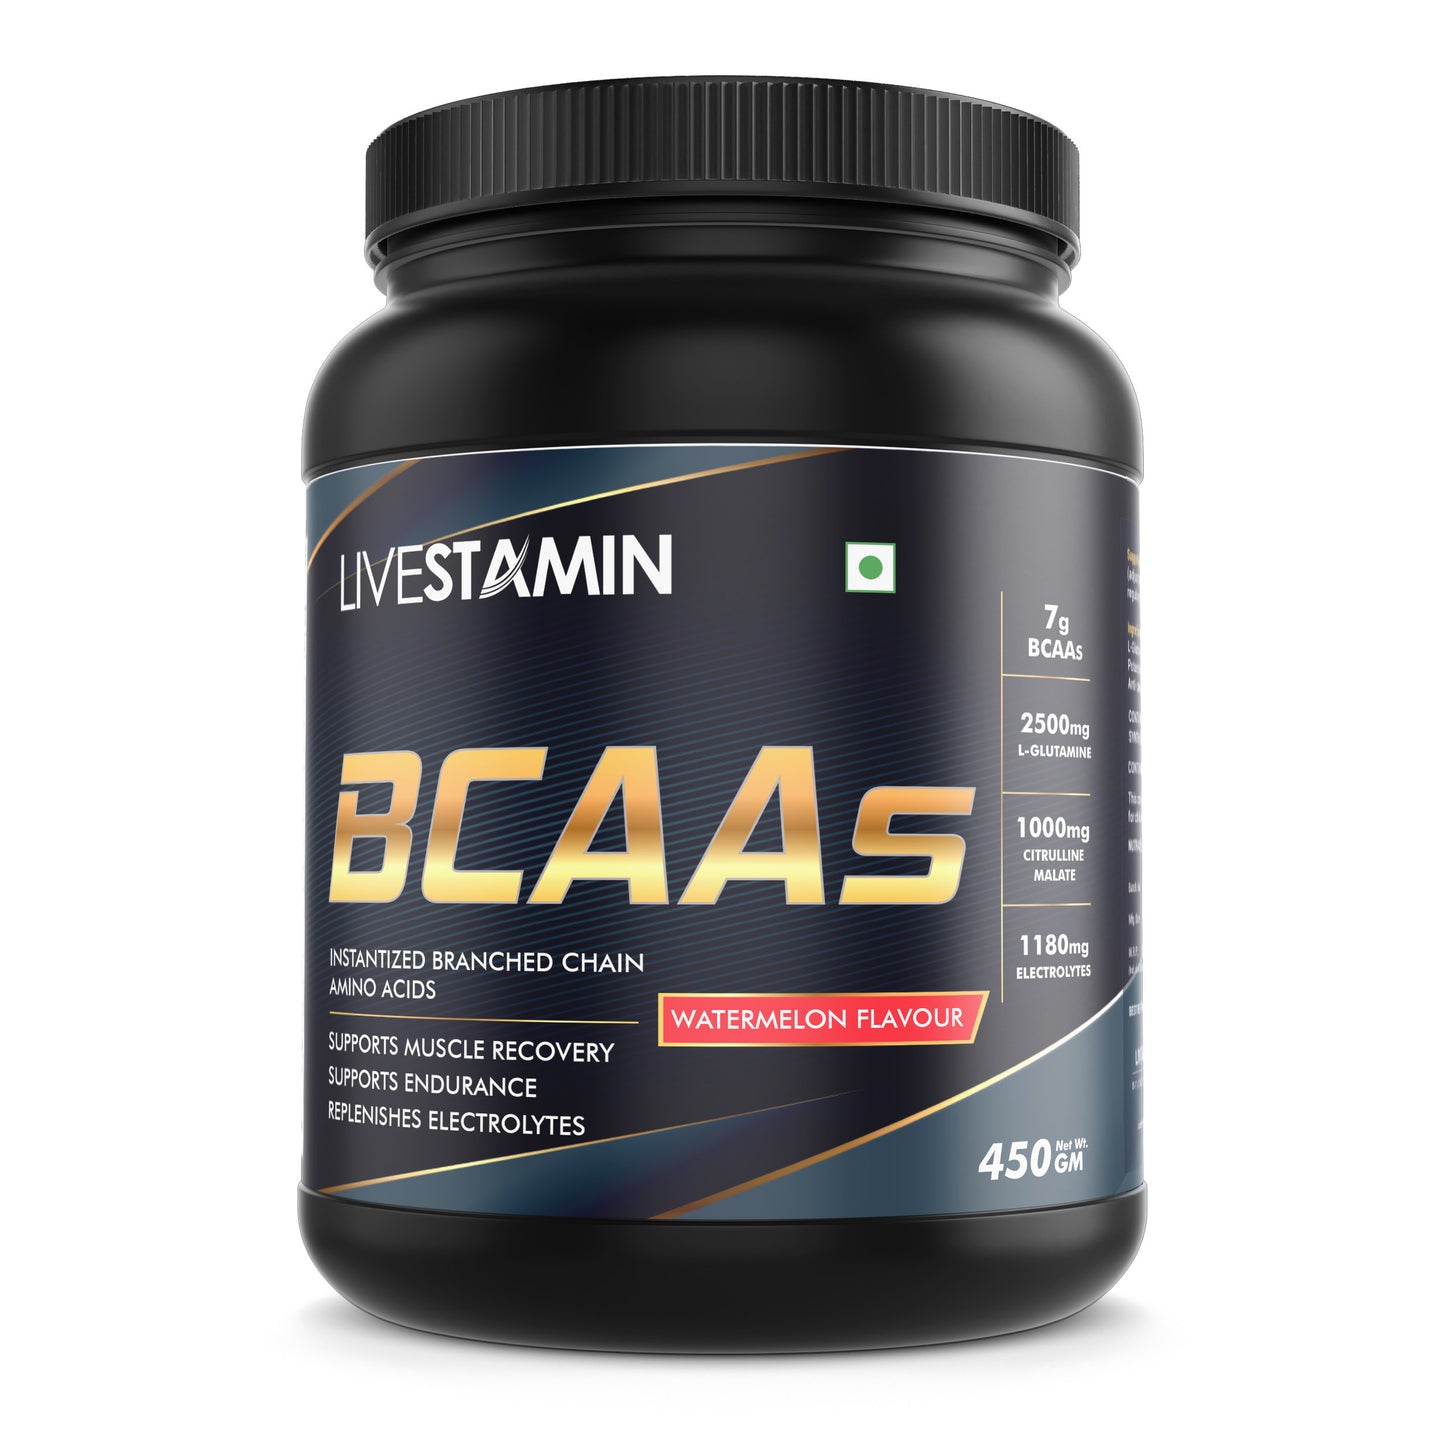 BCAA Powder Supplement